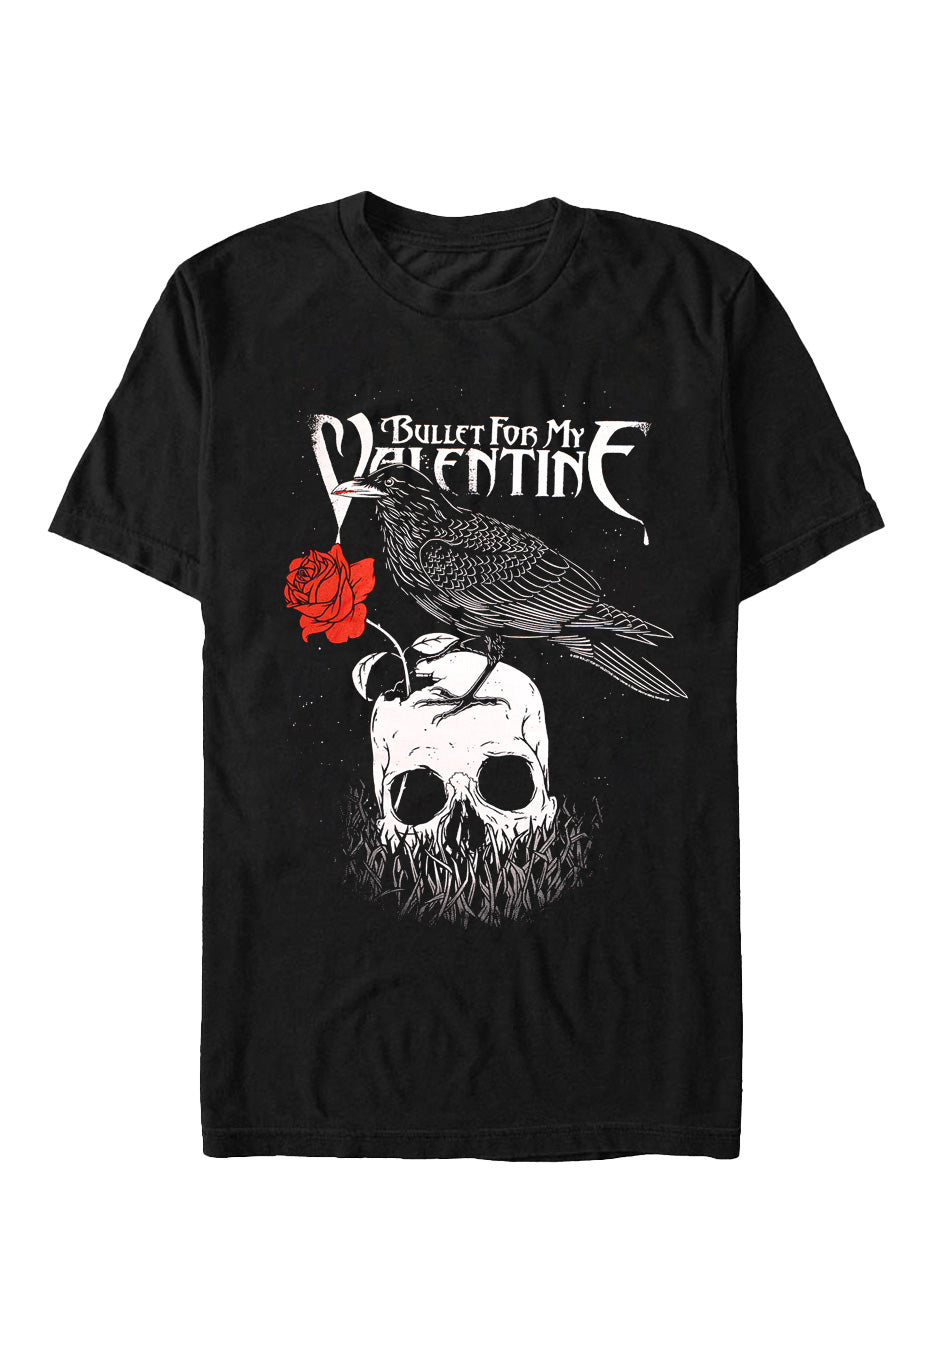 Bullet For My Valentine - Raven - T-Shirt